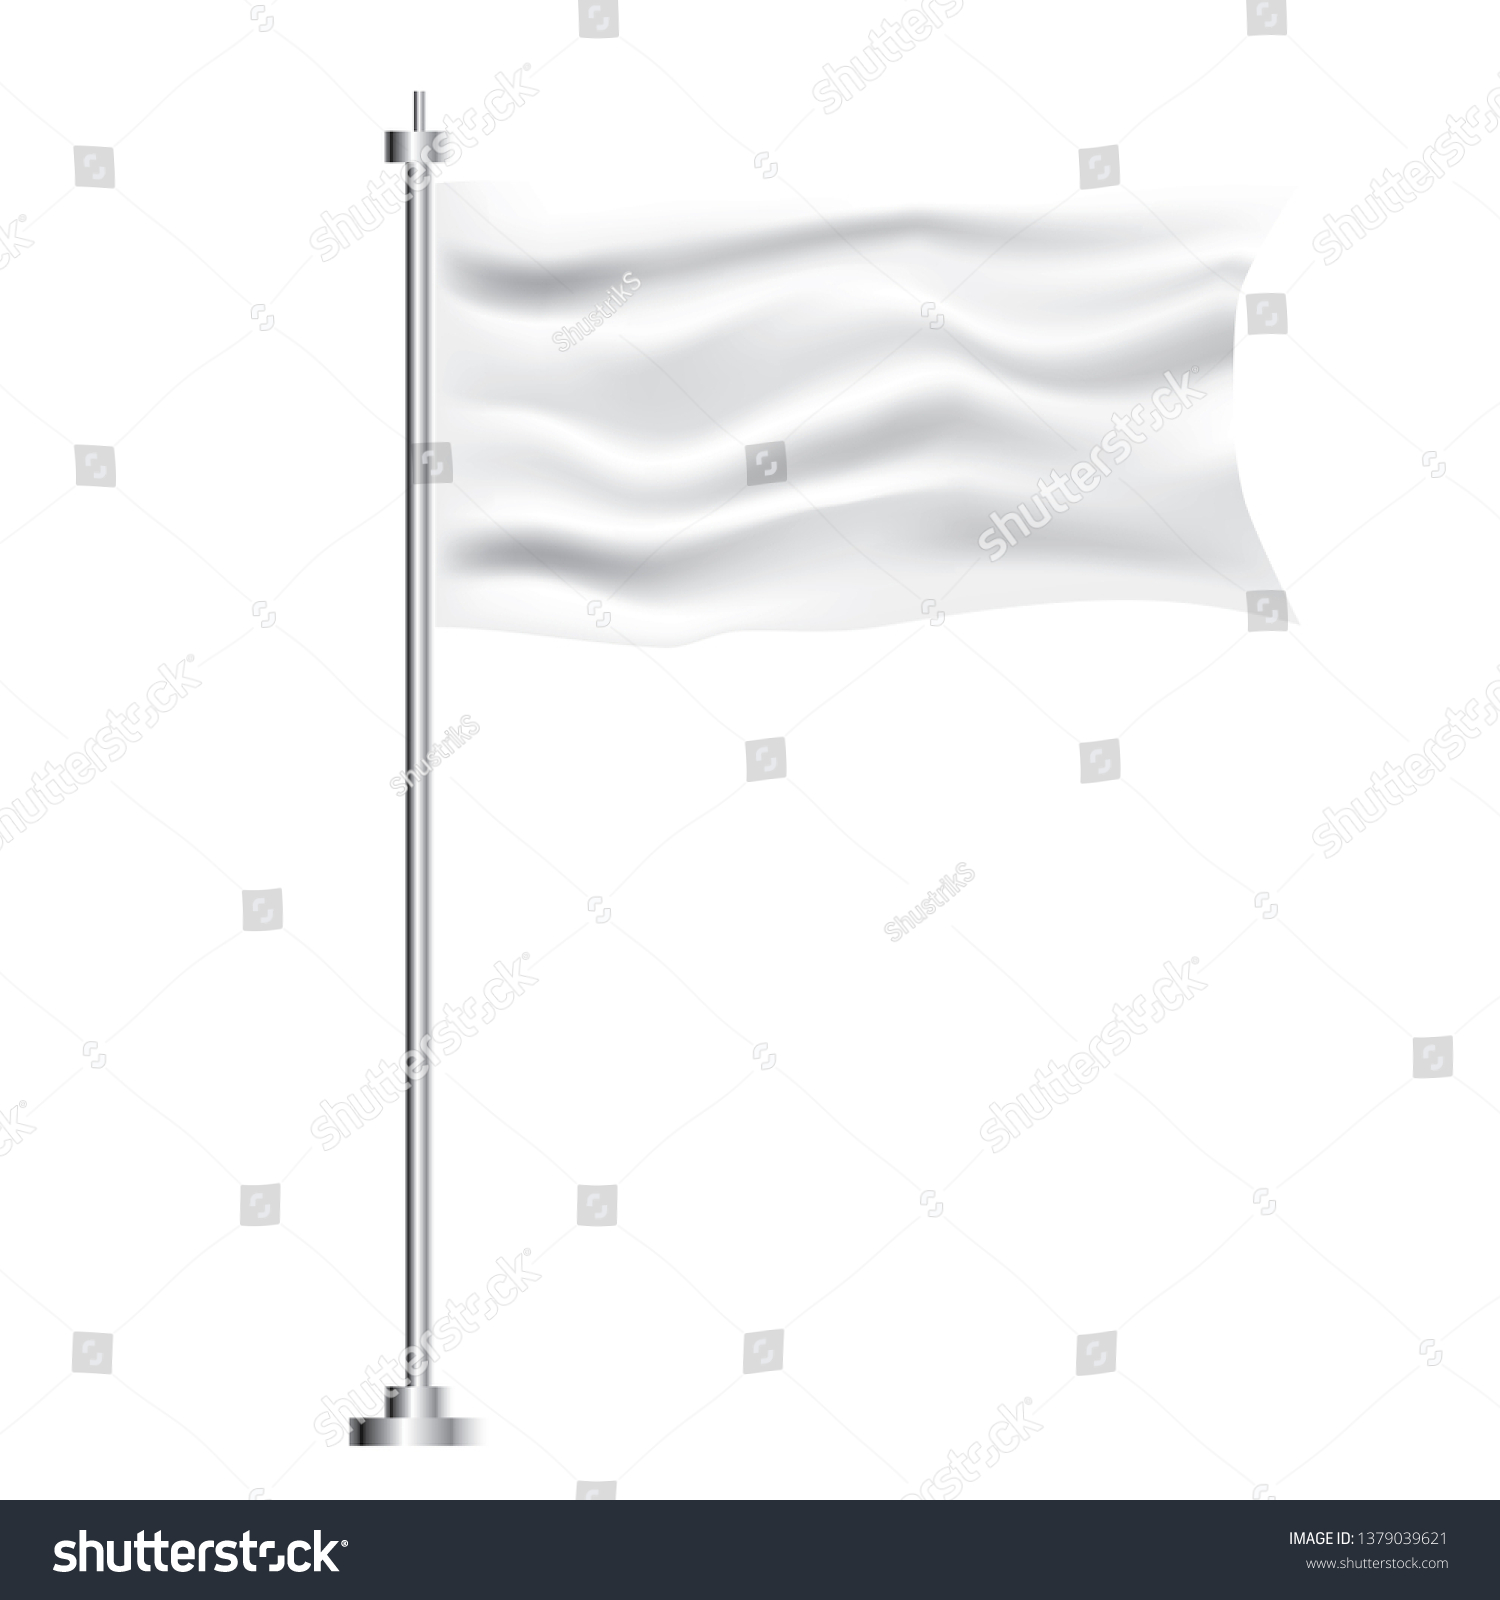 White Textile Waving Empty Flag on Transparent Background.  #1379039621